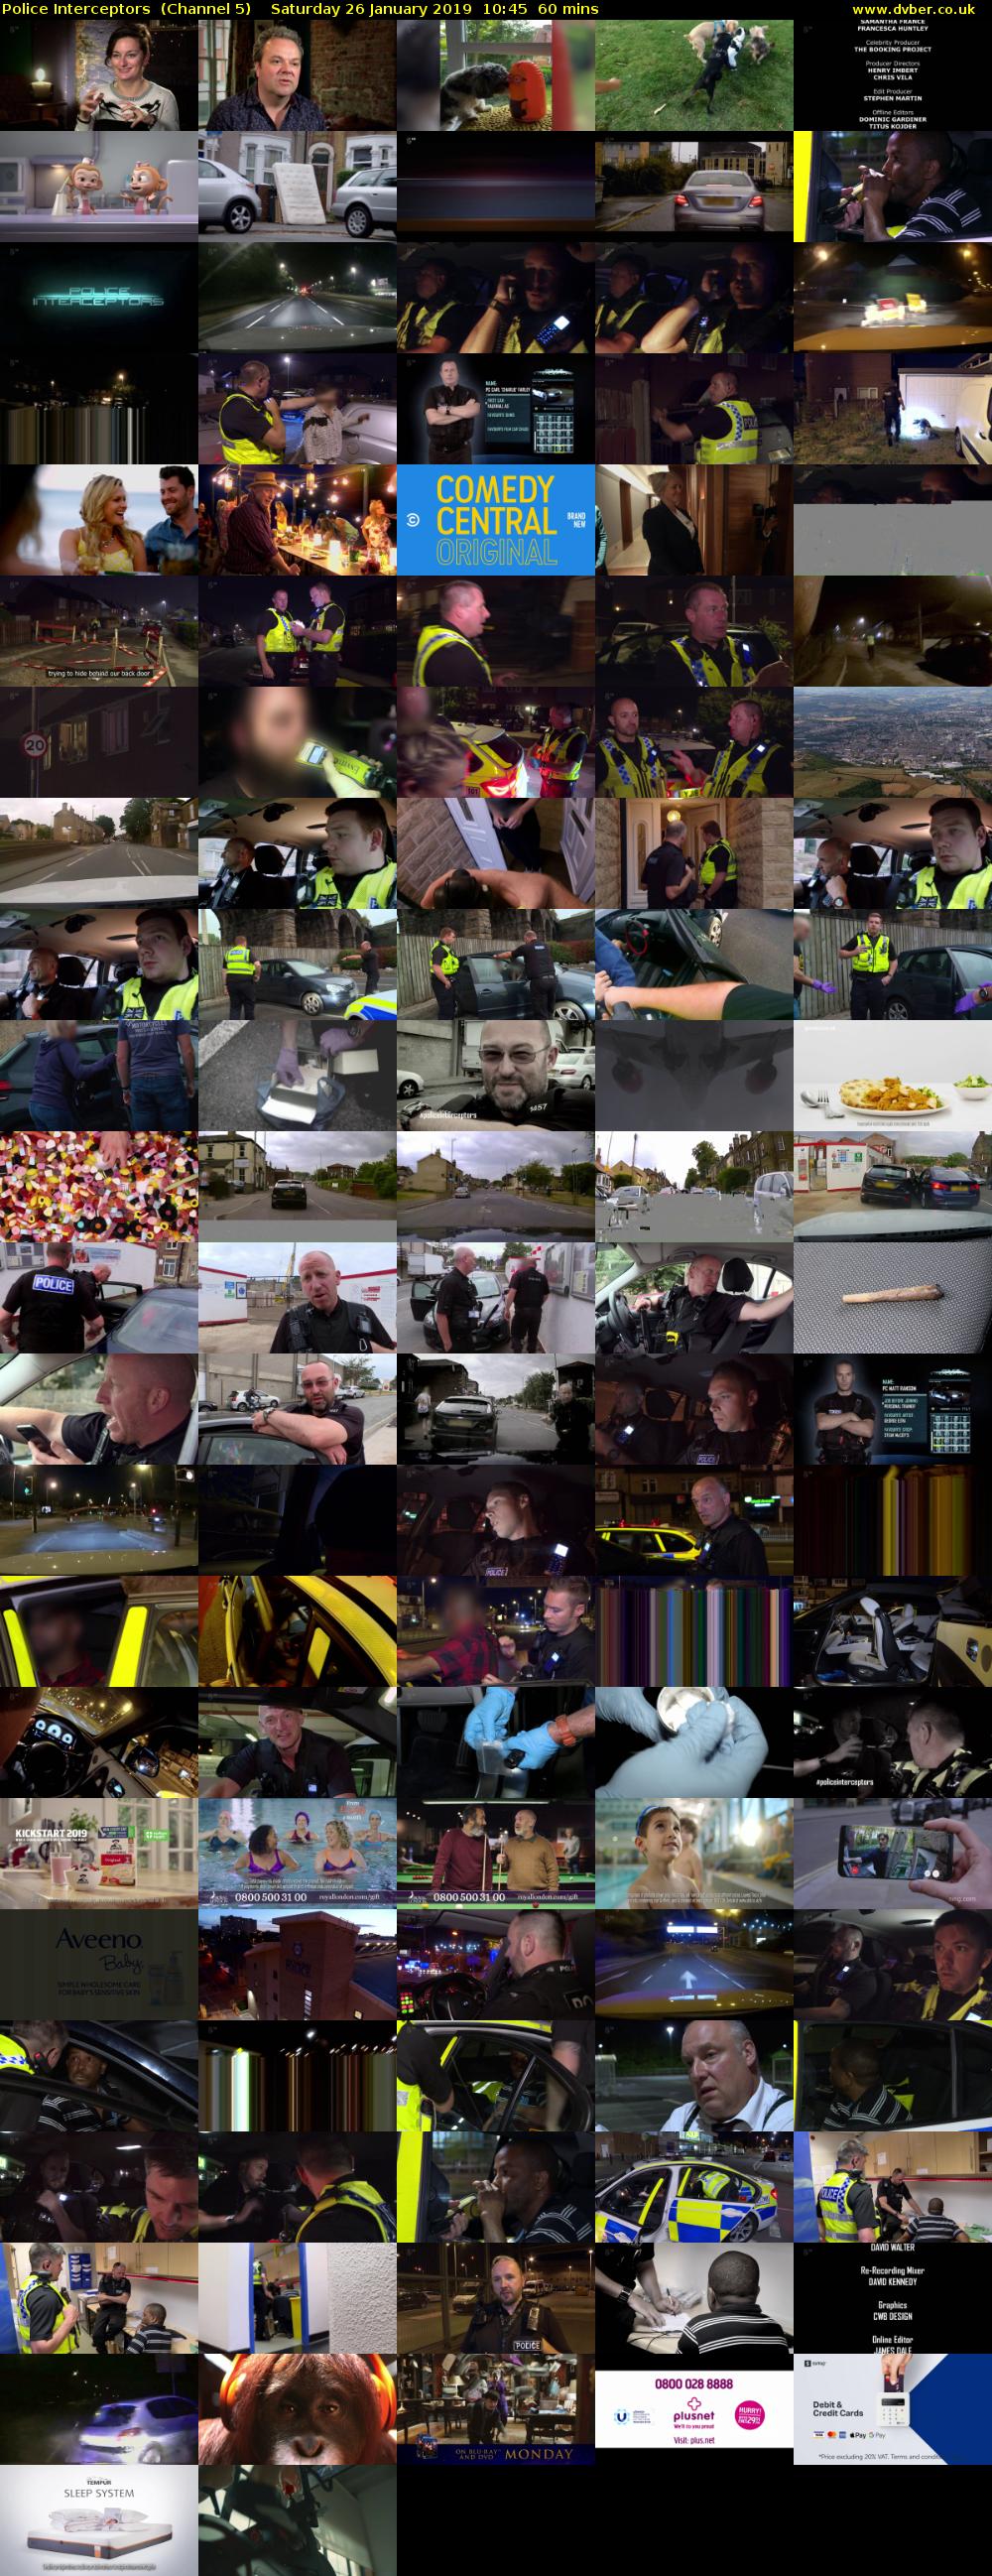 Police Interceptors  (Channel 5) Saturday 26 January 2019 10:45 - 11:45